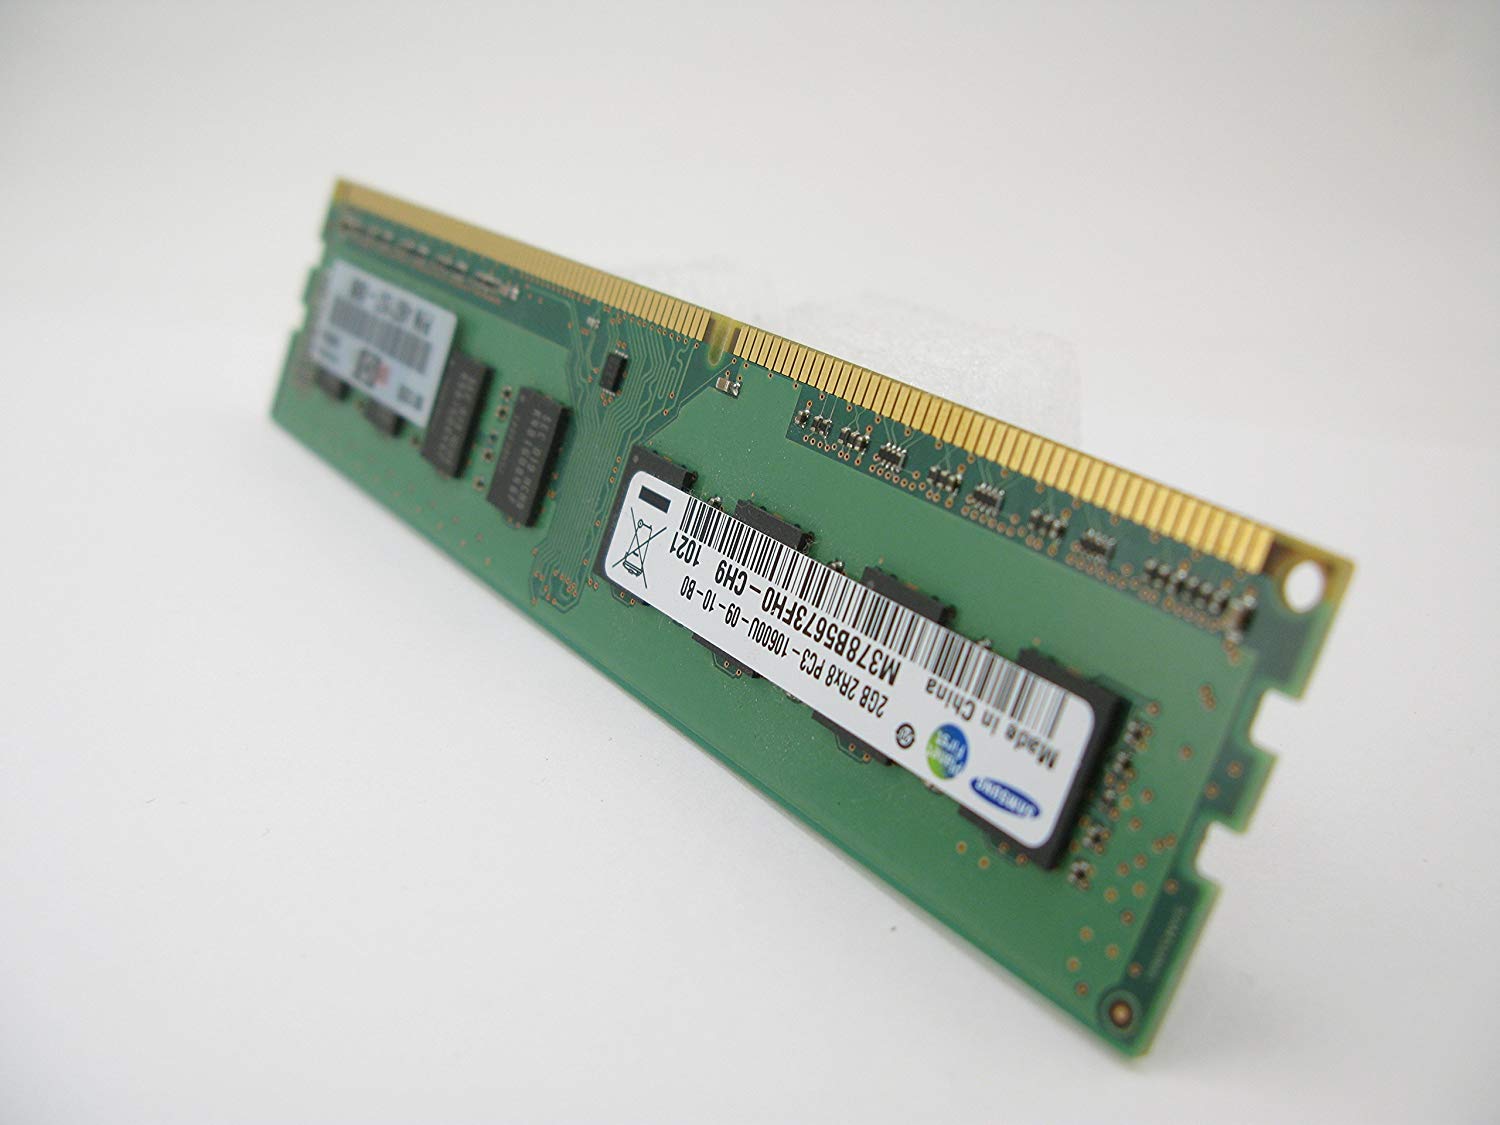 Samsung 2 GB DDR3 SDRAM MEMORY 240pin PC3 10600U 1333 MHz m378b5673fh0ch9